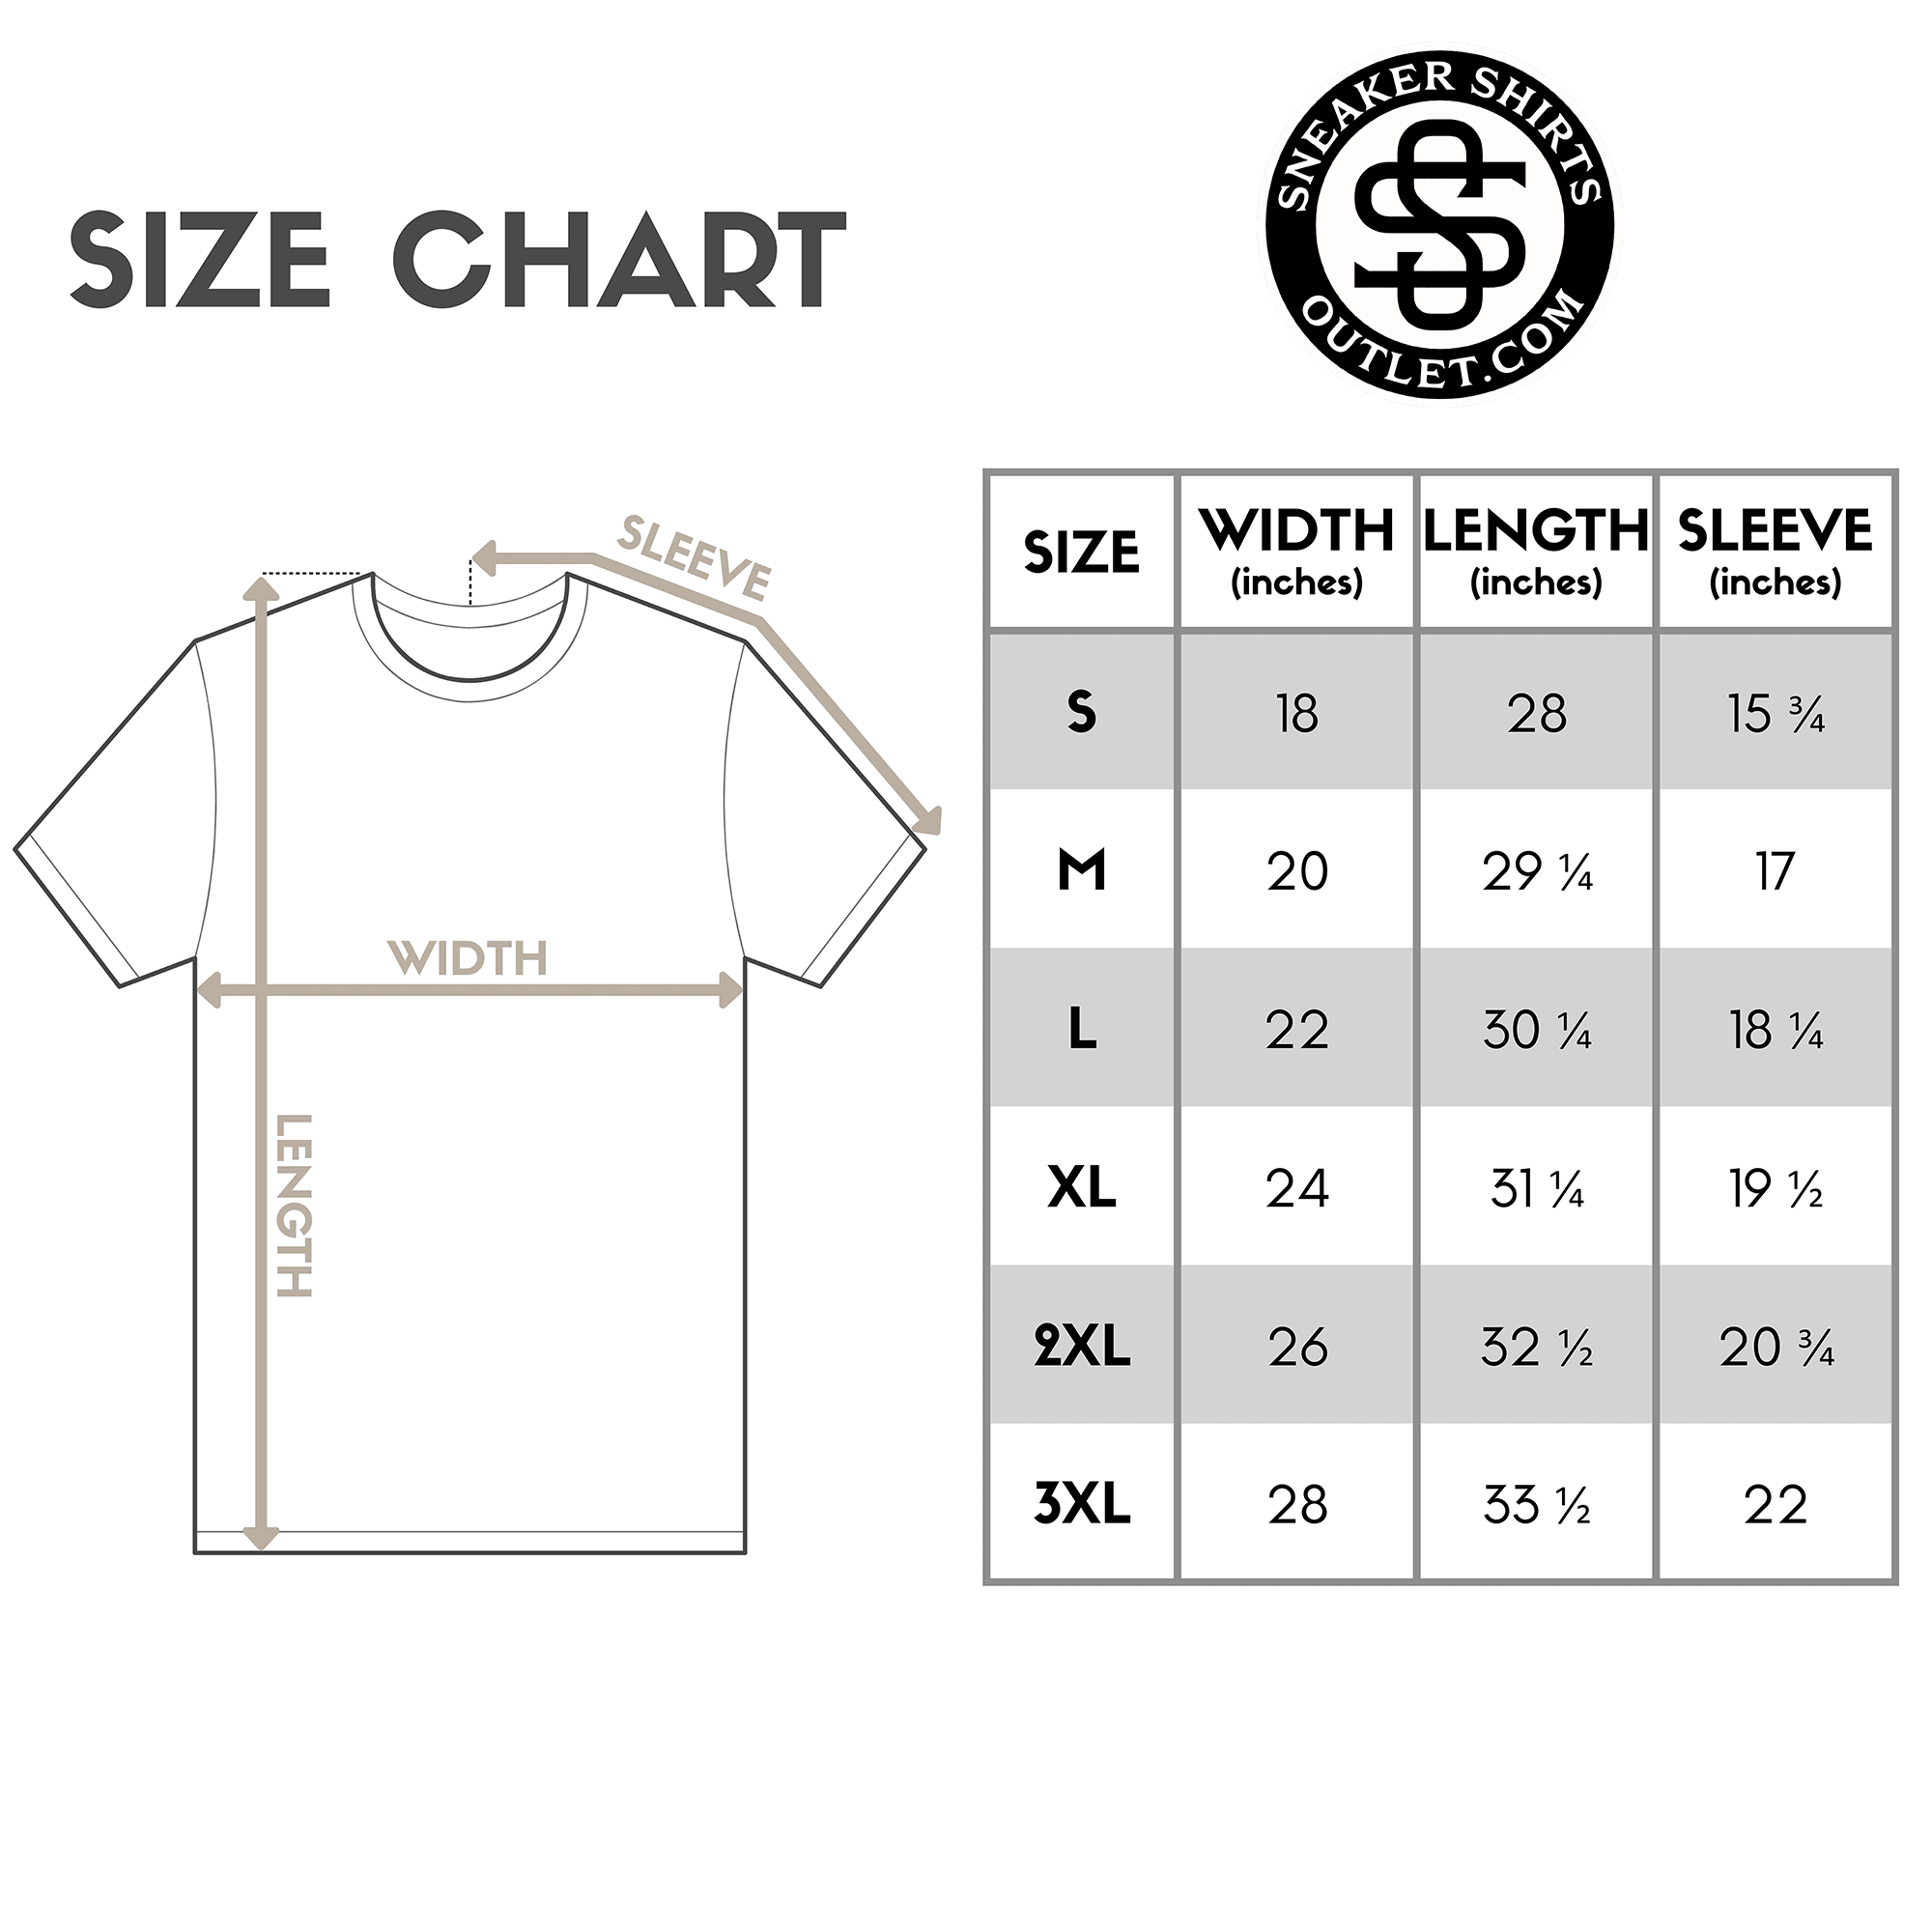 size chart 23 Melting Shirt Yeezy Boost 350 V2 Slate photo